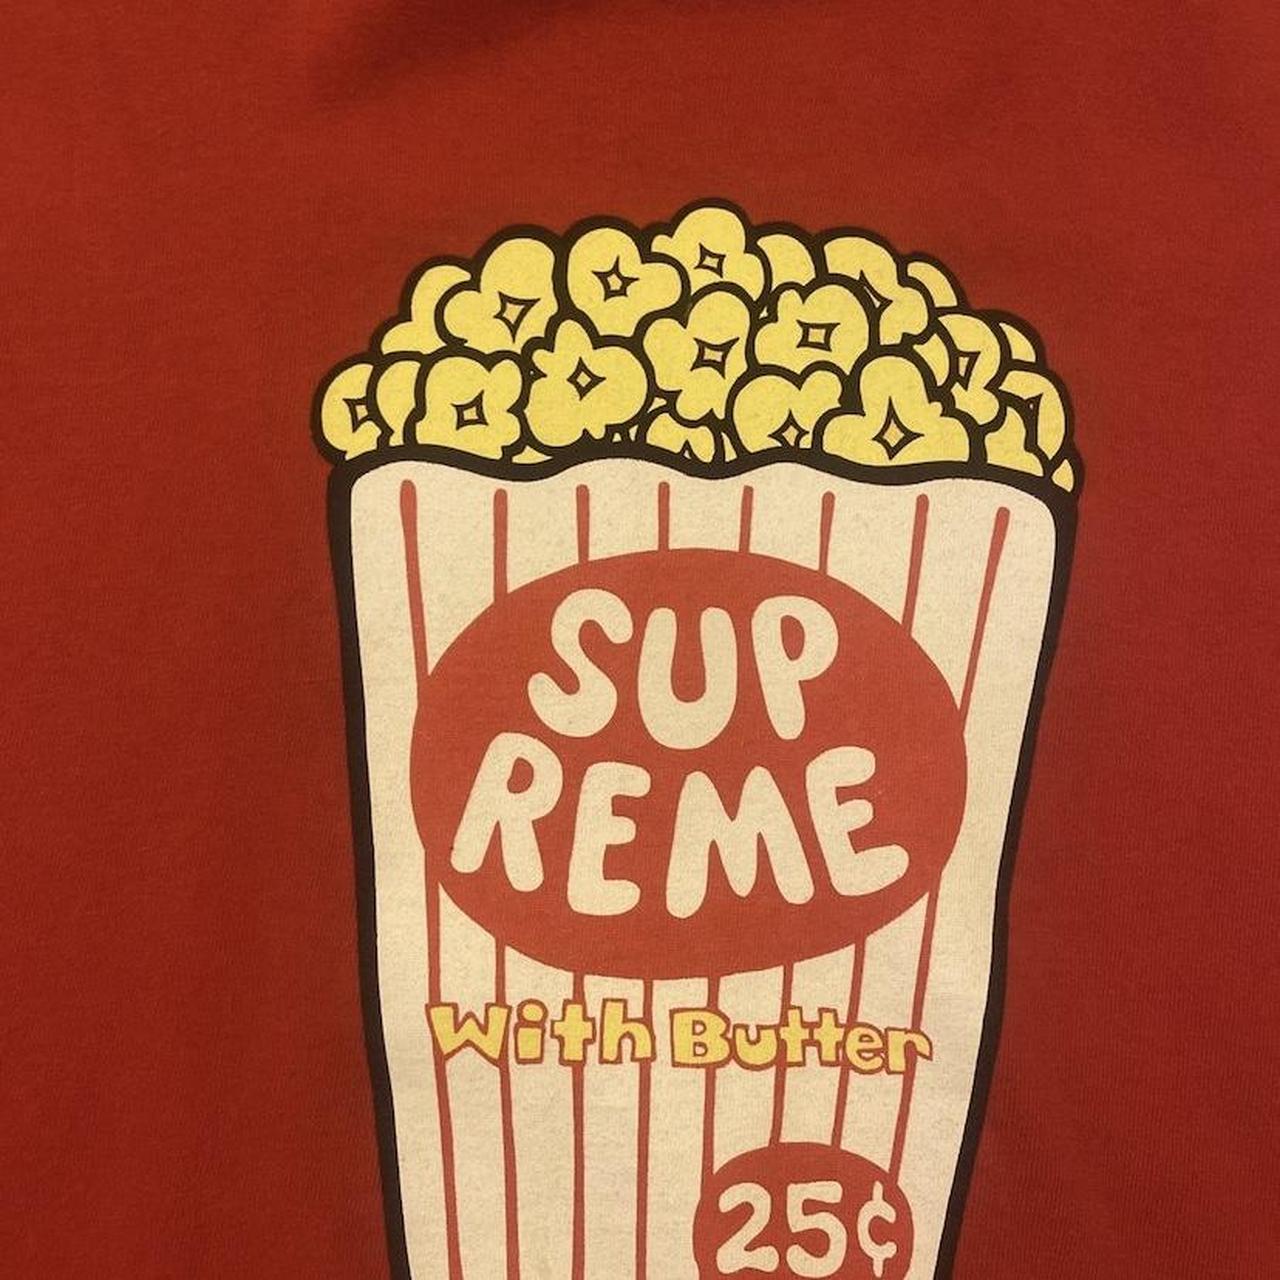 SUPREME T-SHIRTS - Popcorn Store